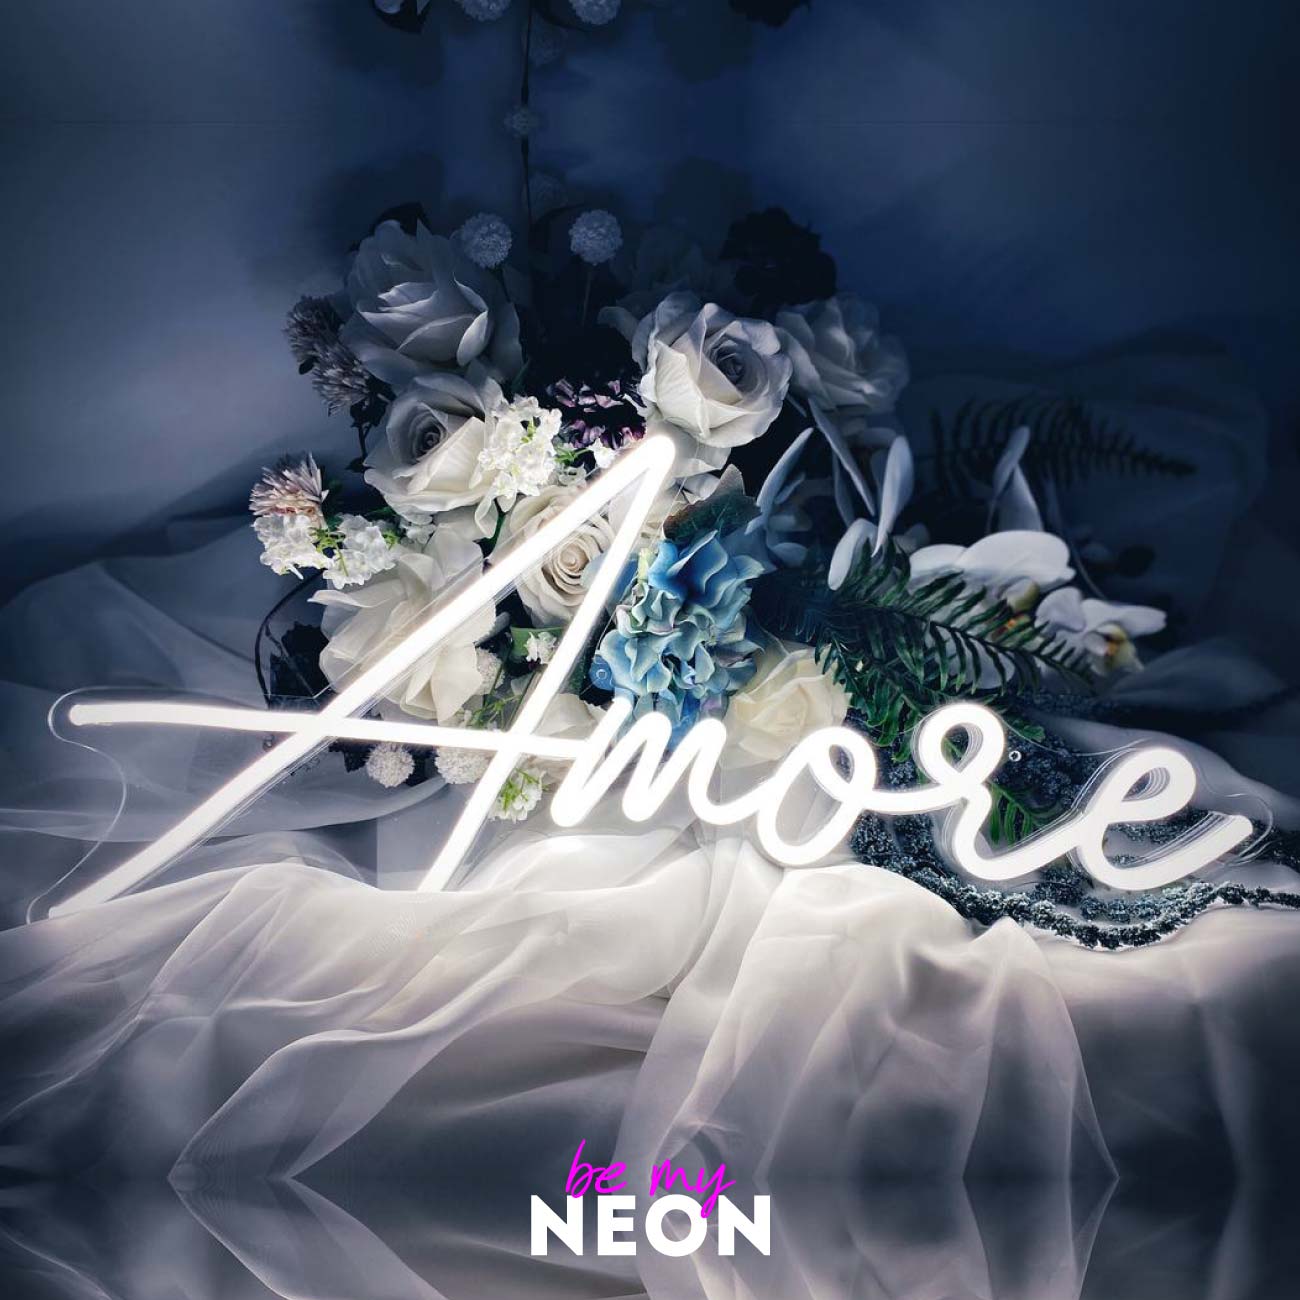 "Amore" Liebes - Leuchtschrift aus LED Neon